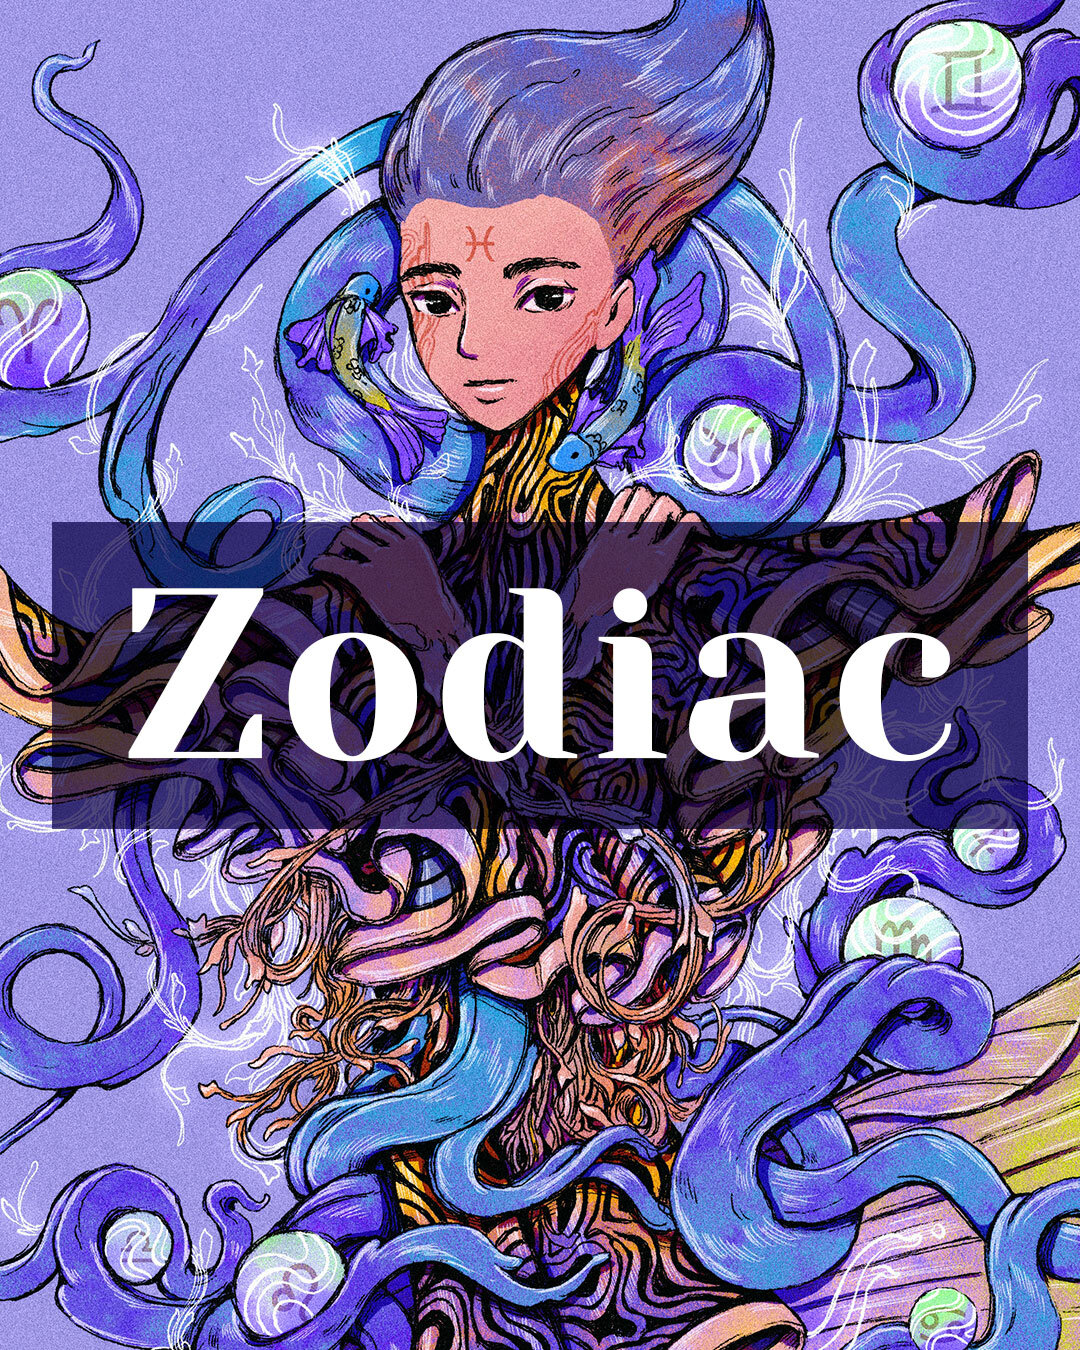 Zodiac Illustrations and Paintings - 12 Horoscopes of the Zodiac